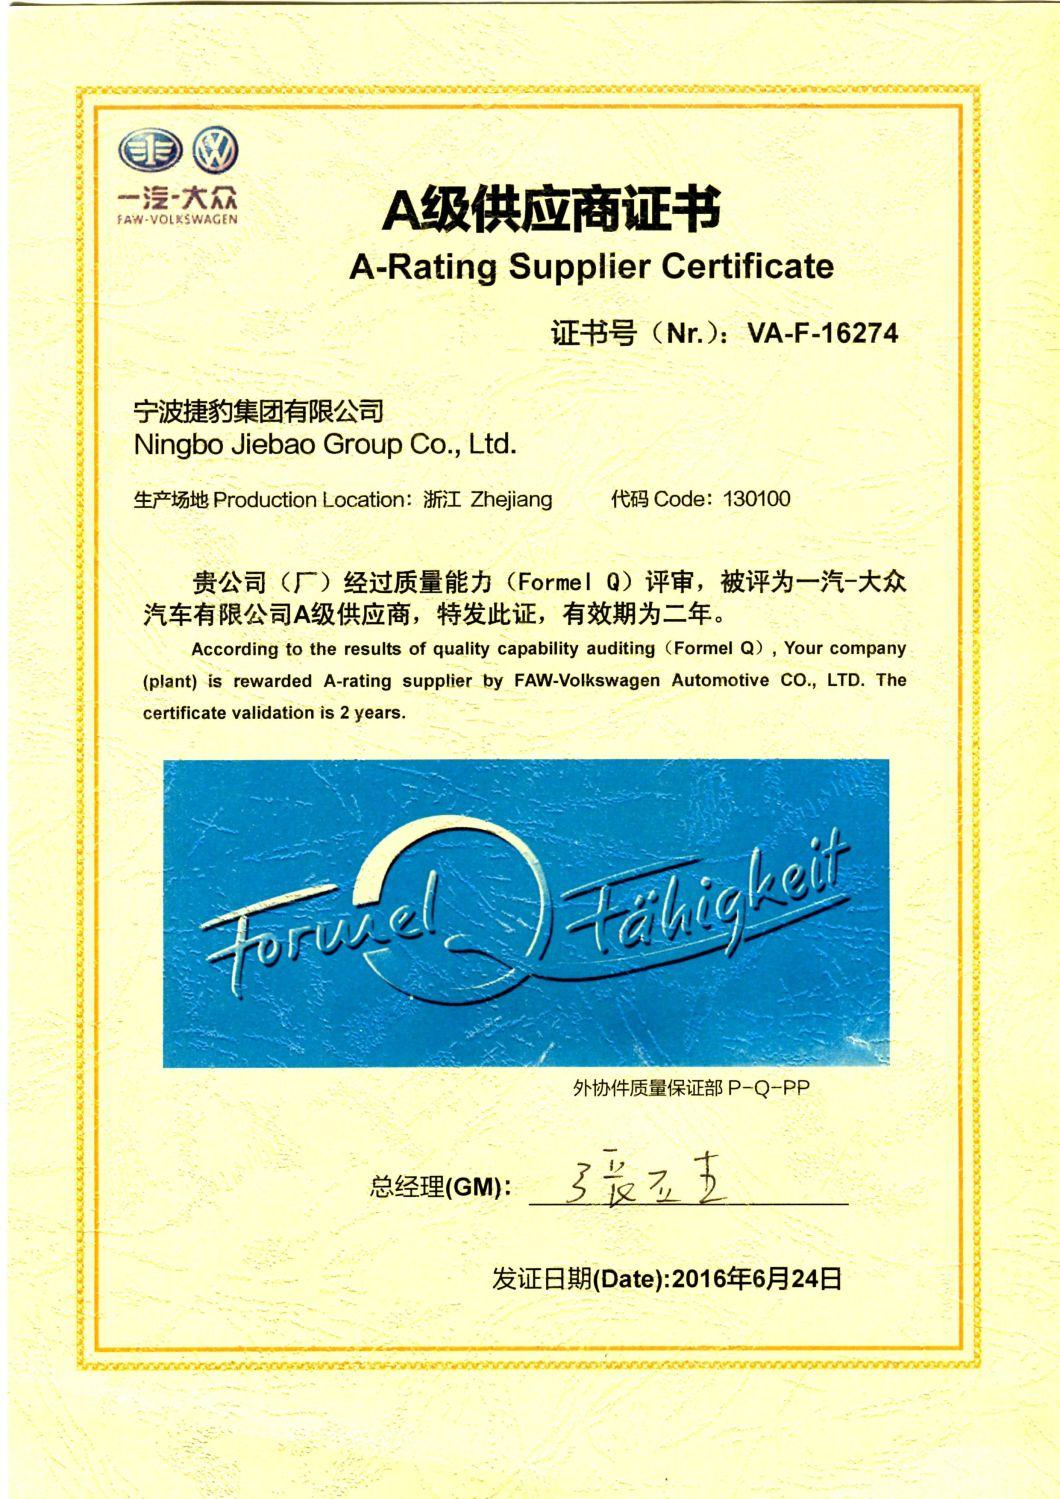 GM Belt Maker - Jiebao High Quality Neoprene Transmission Parts Fan Automotive Textile Garment Packaging Agricultural Machinery Ribbed Timing Belt